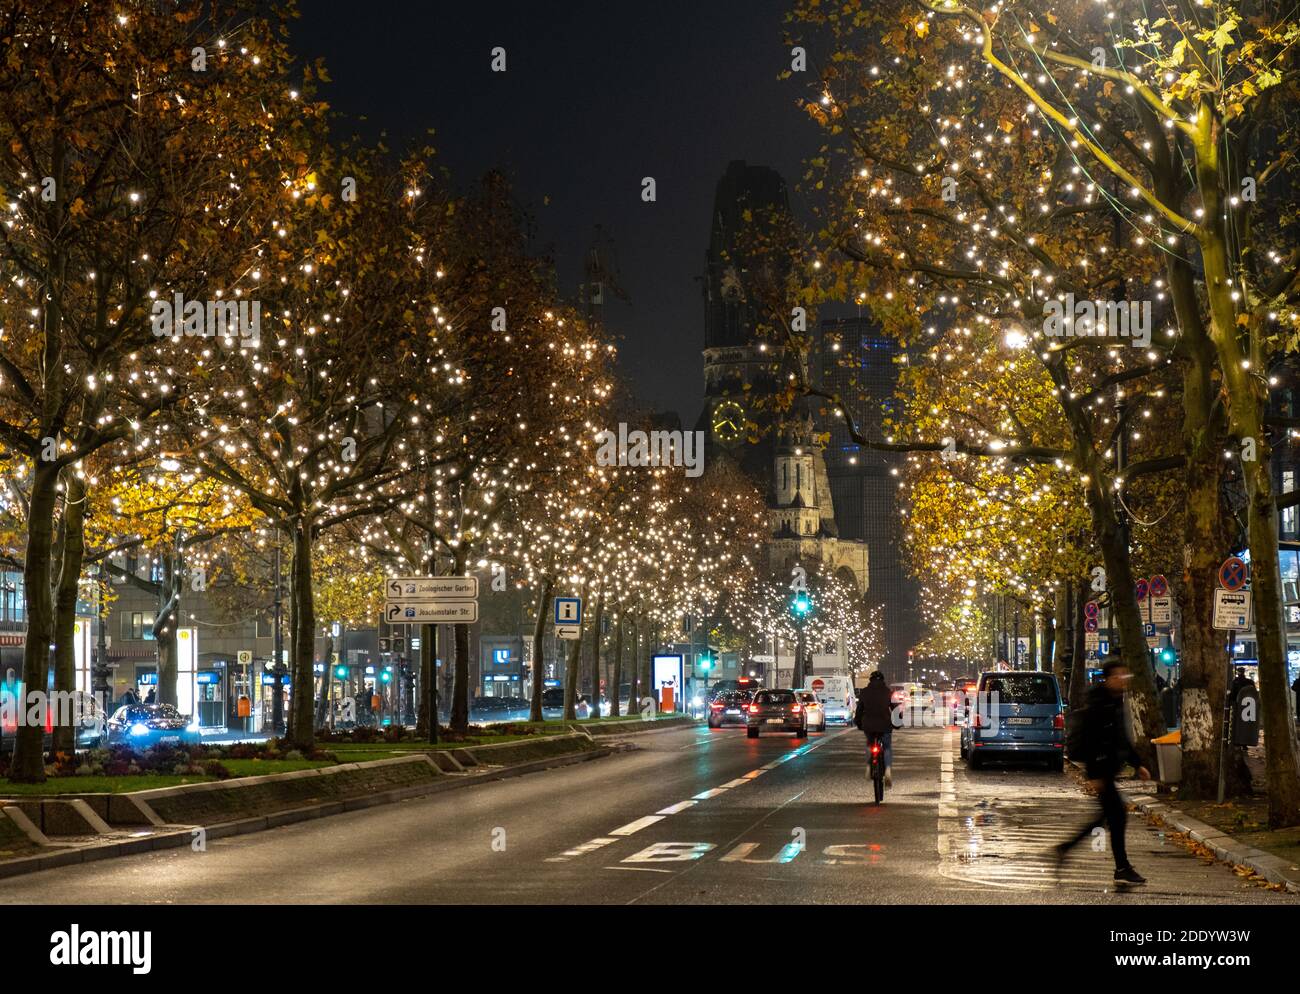 Illuminations de Noël sur le boulevard Kurfürstendamm, Berlin Banque D'Images